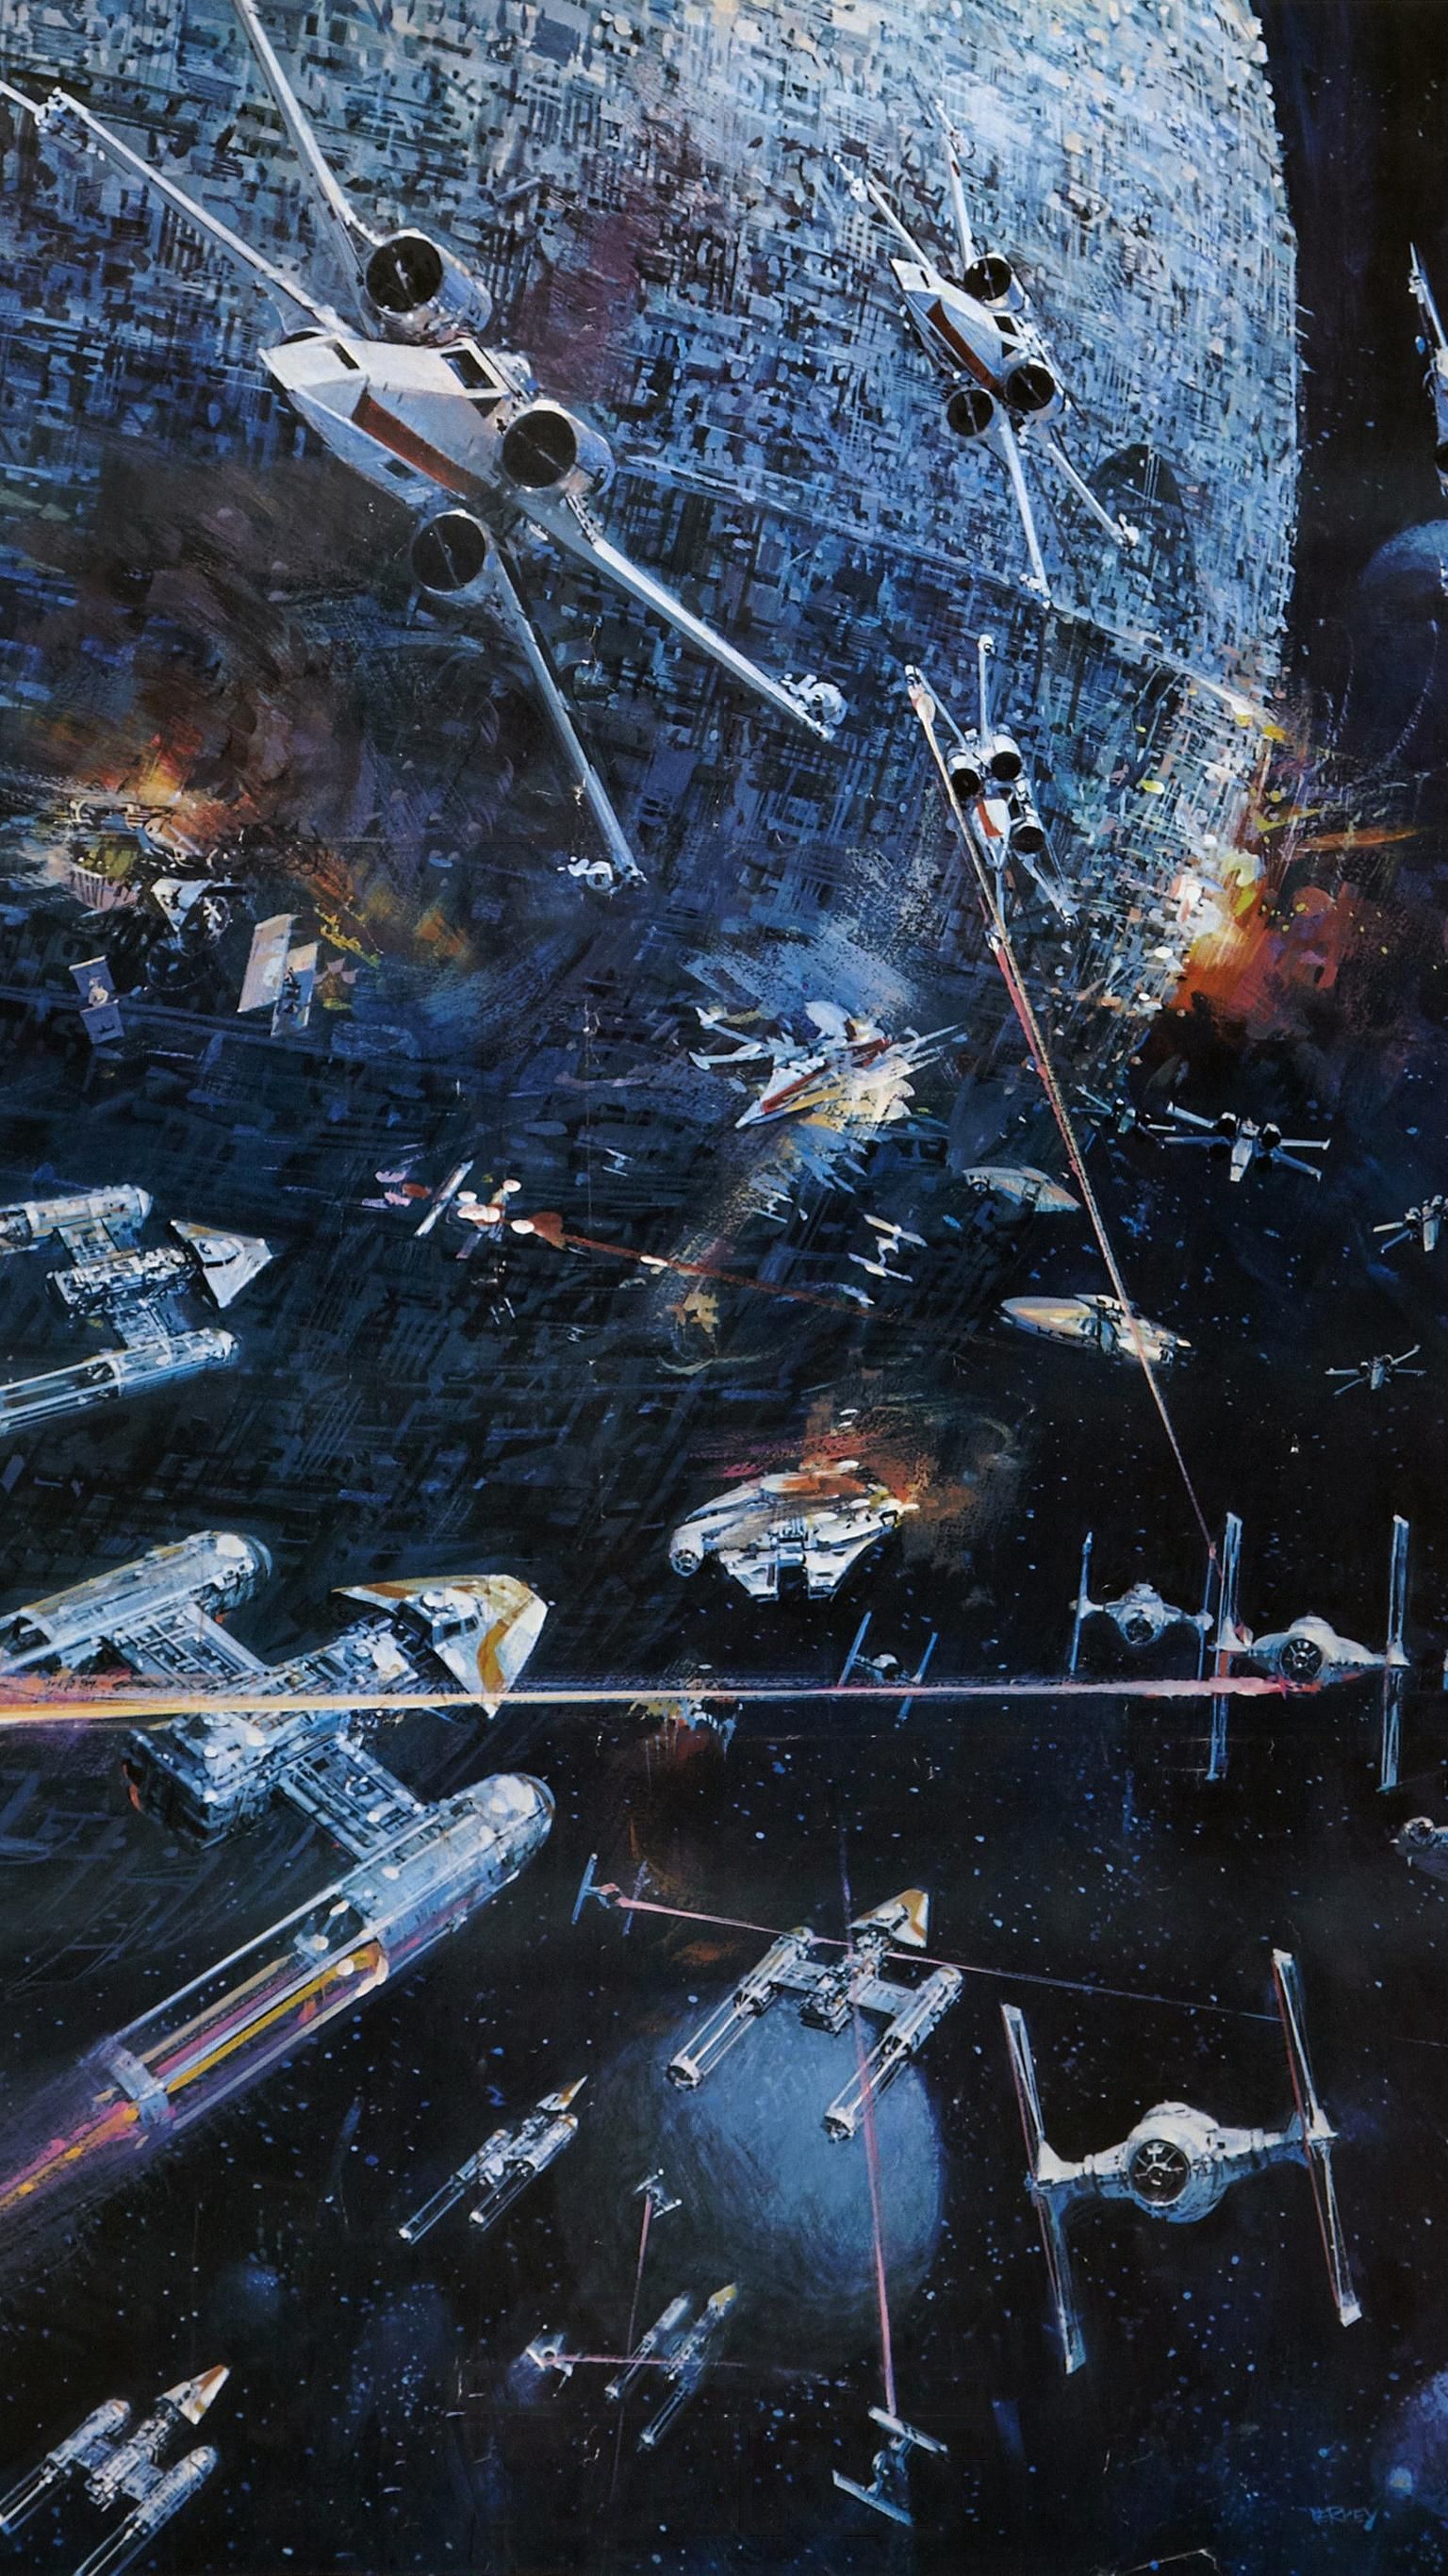 Star Wars (1977) Phone Wallpaper. Star wars poster, Star wars